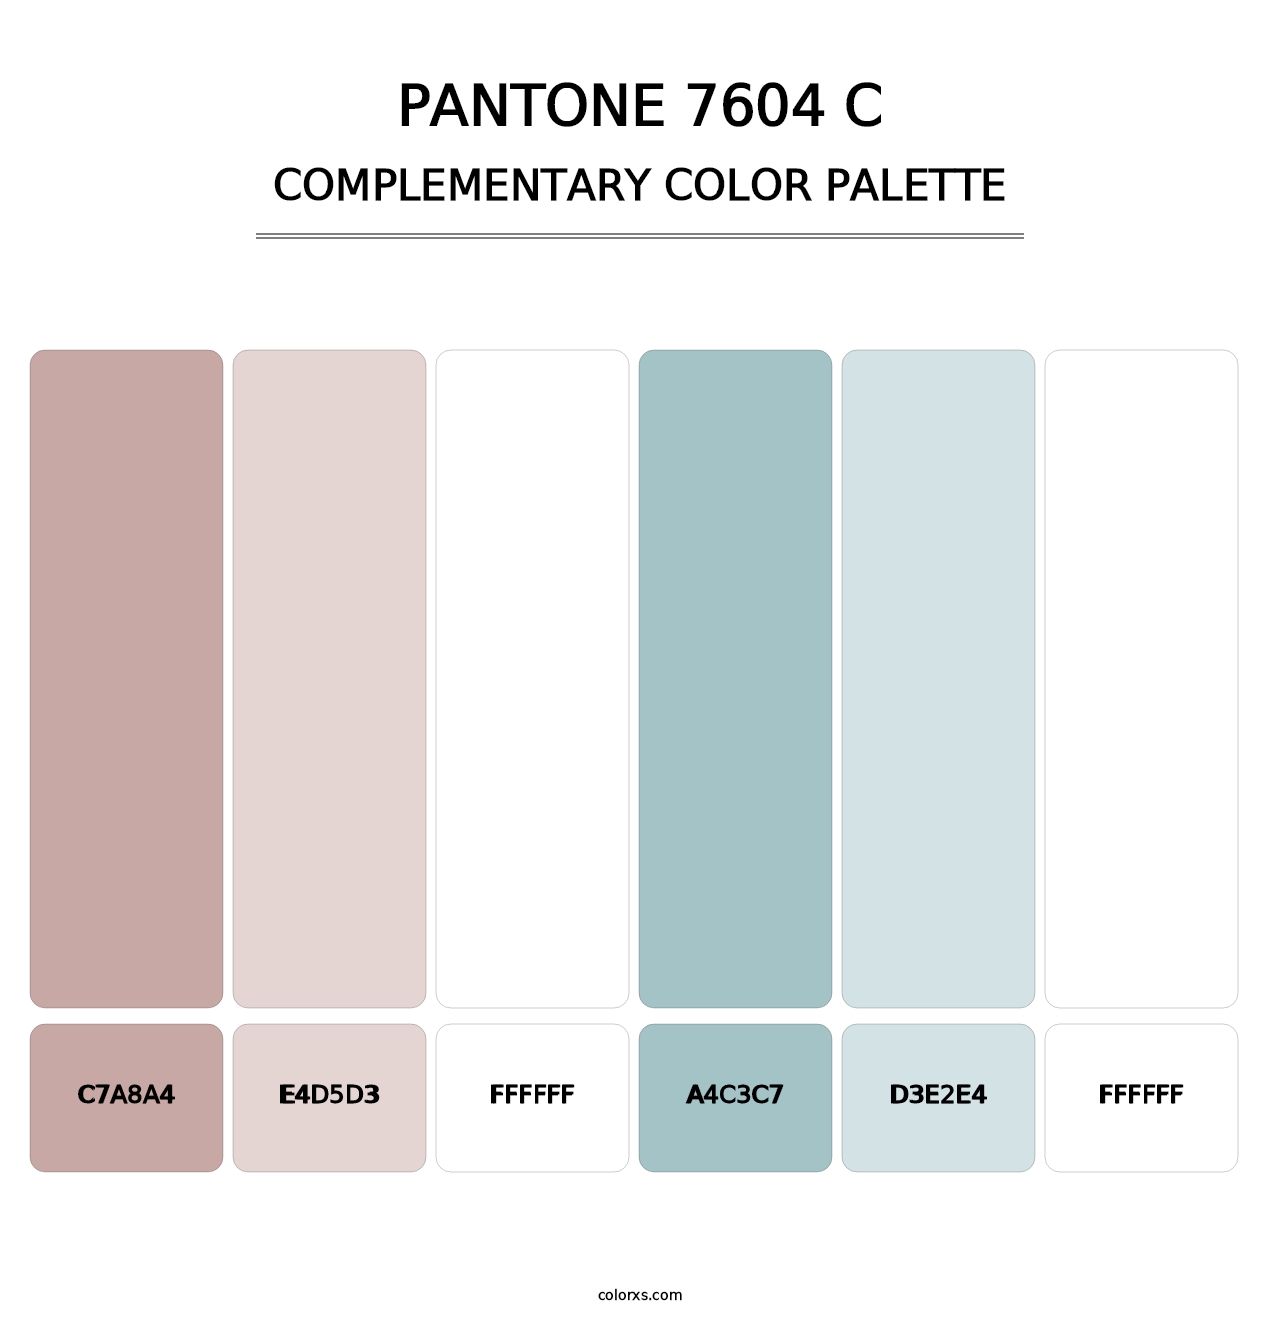 PANTONE 7604 C - Complementary Color Palette